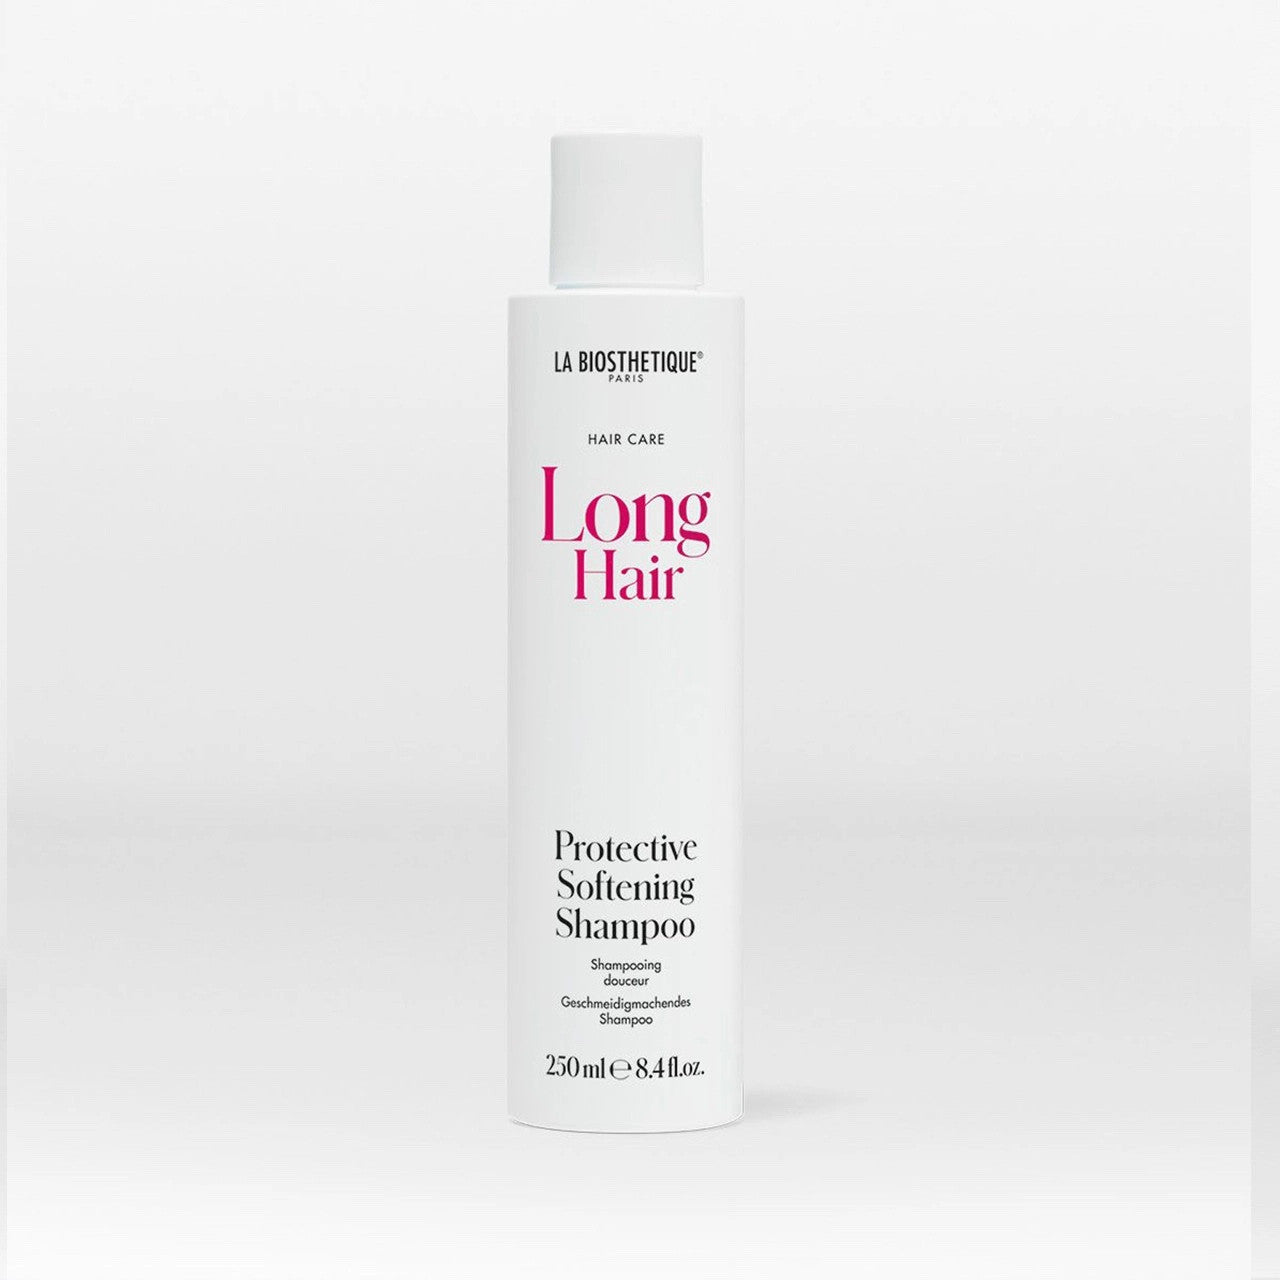 La Biosthetique's Long Hair Protective Softening Shampoo 250ml